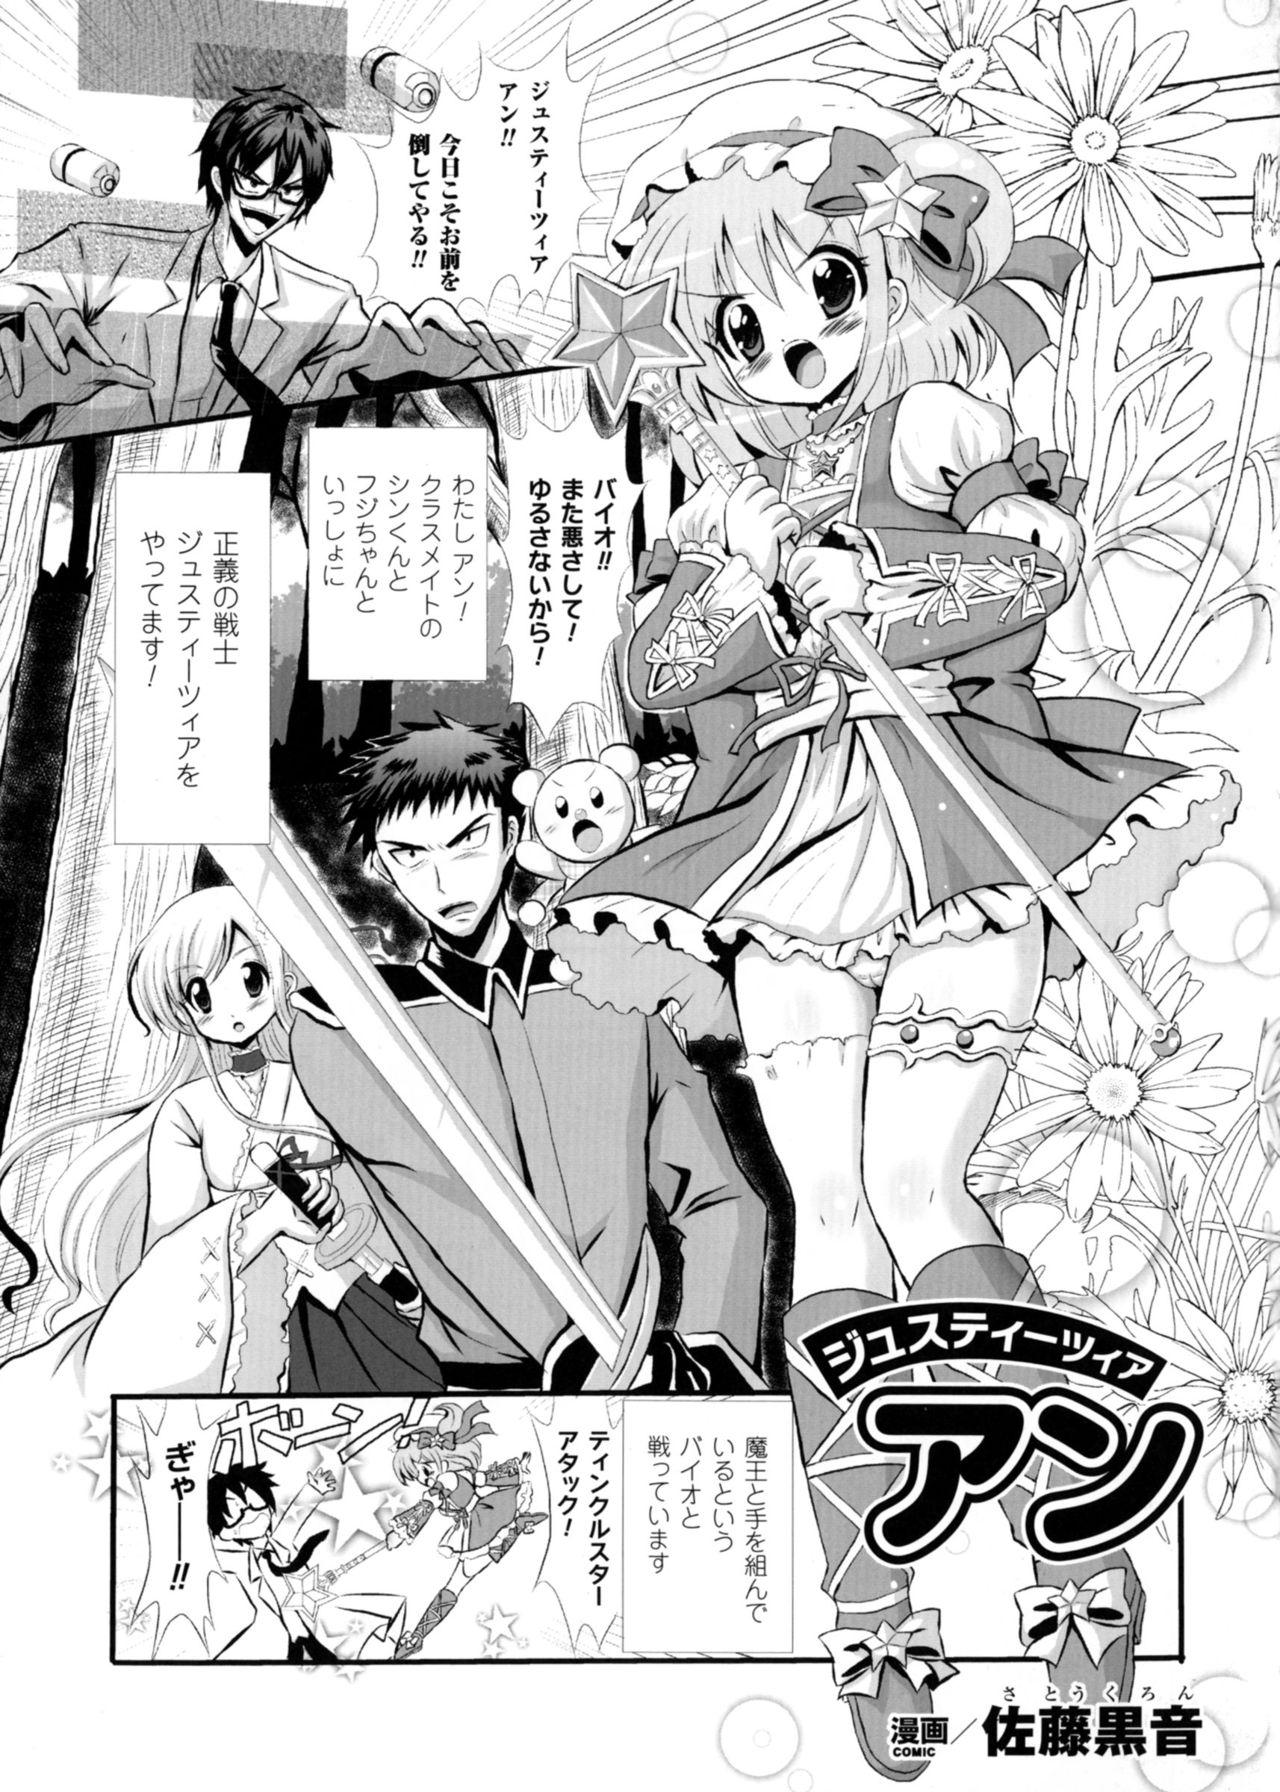 Seigi no Heroine Kangoku File DX Vol. 3 130